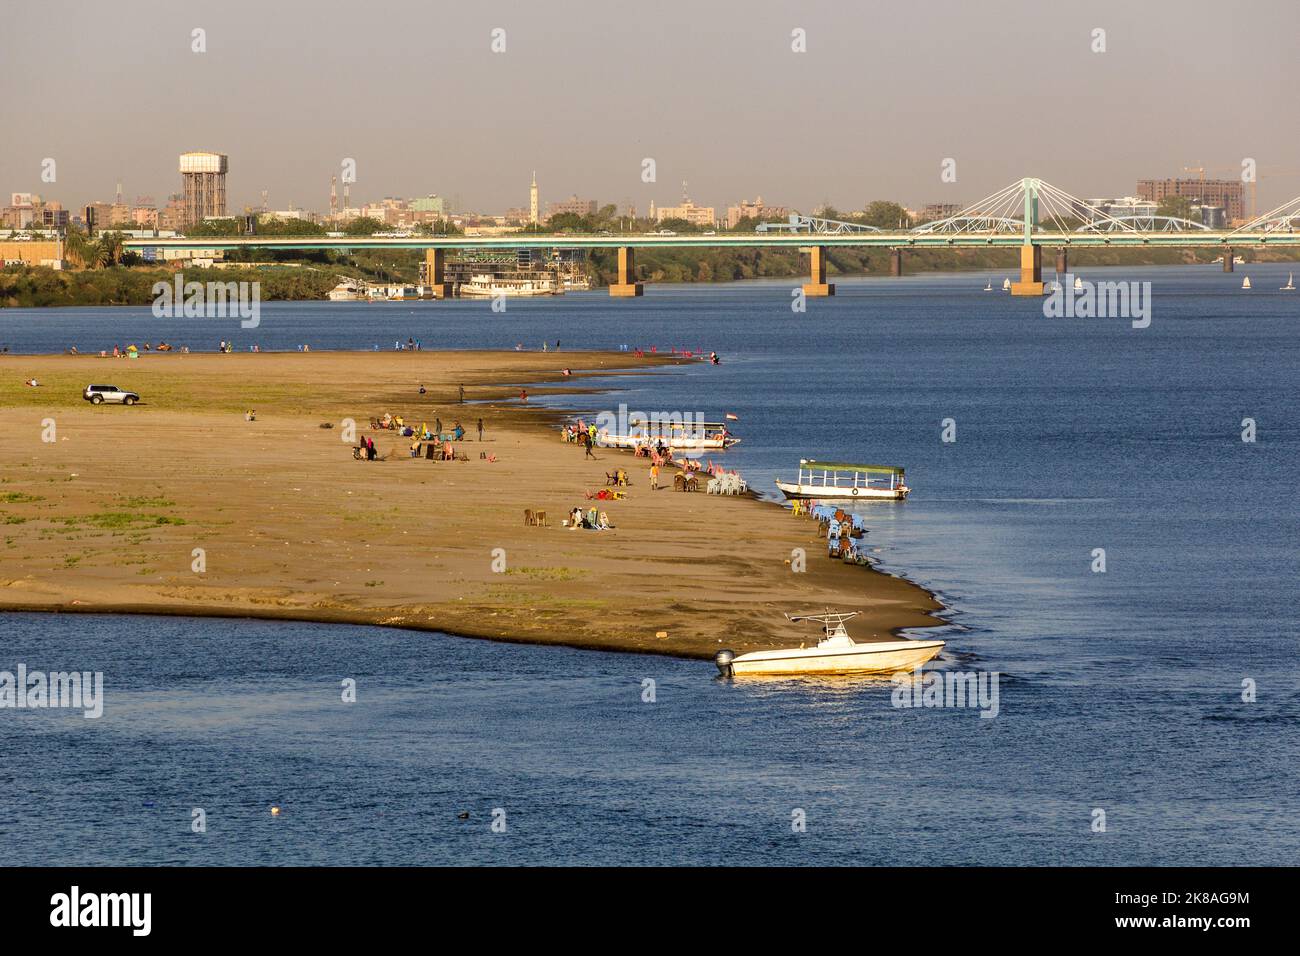 KHARTOUM, SUDAN - MARCH 7, 2019: People enjoy Tuti beach in Khartoum, capital of Sudan Stock Photo